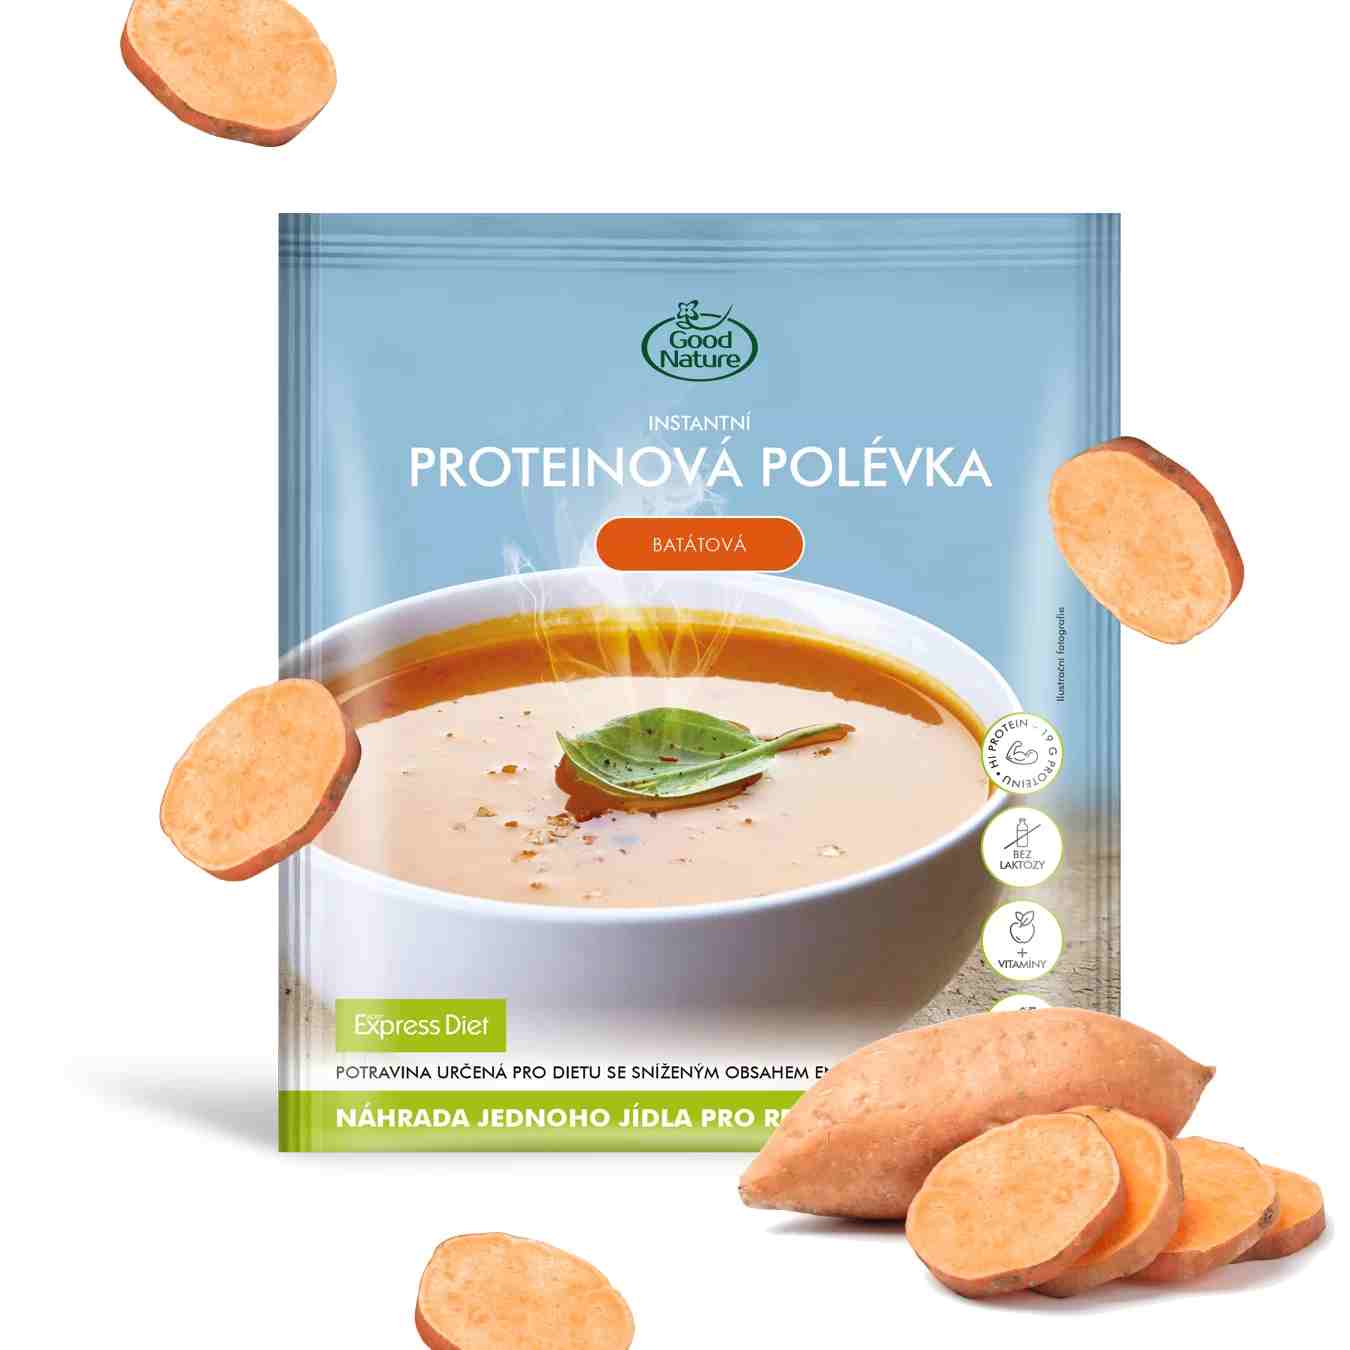 Good Nature Express Diet Proteinová polévka batátová 55 g